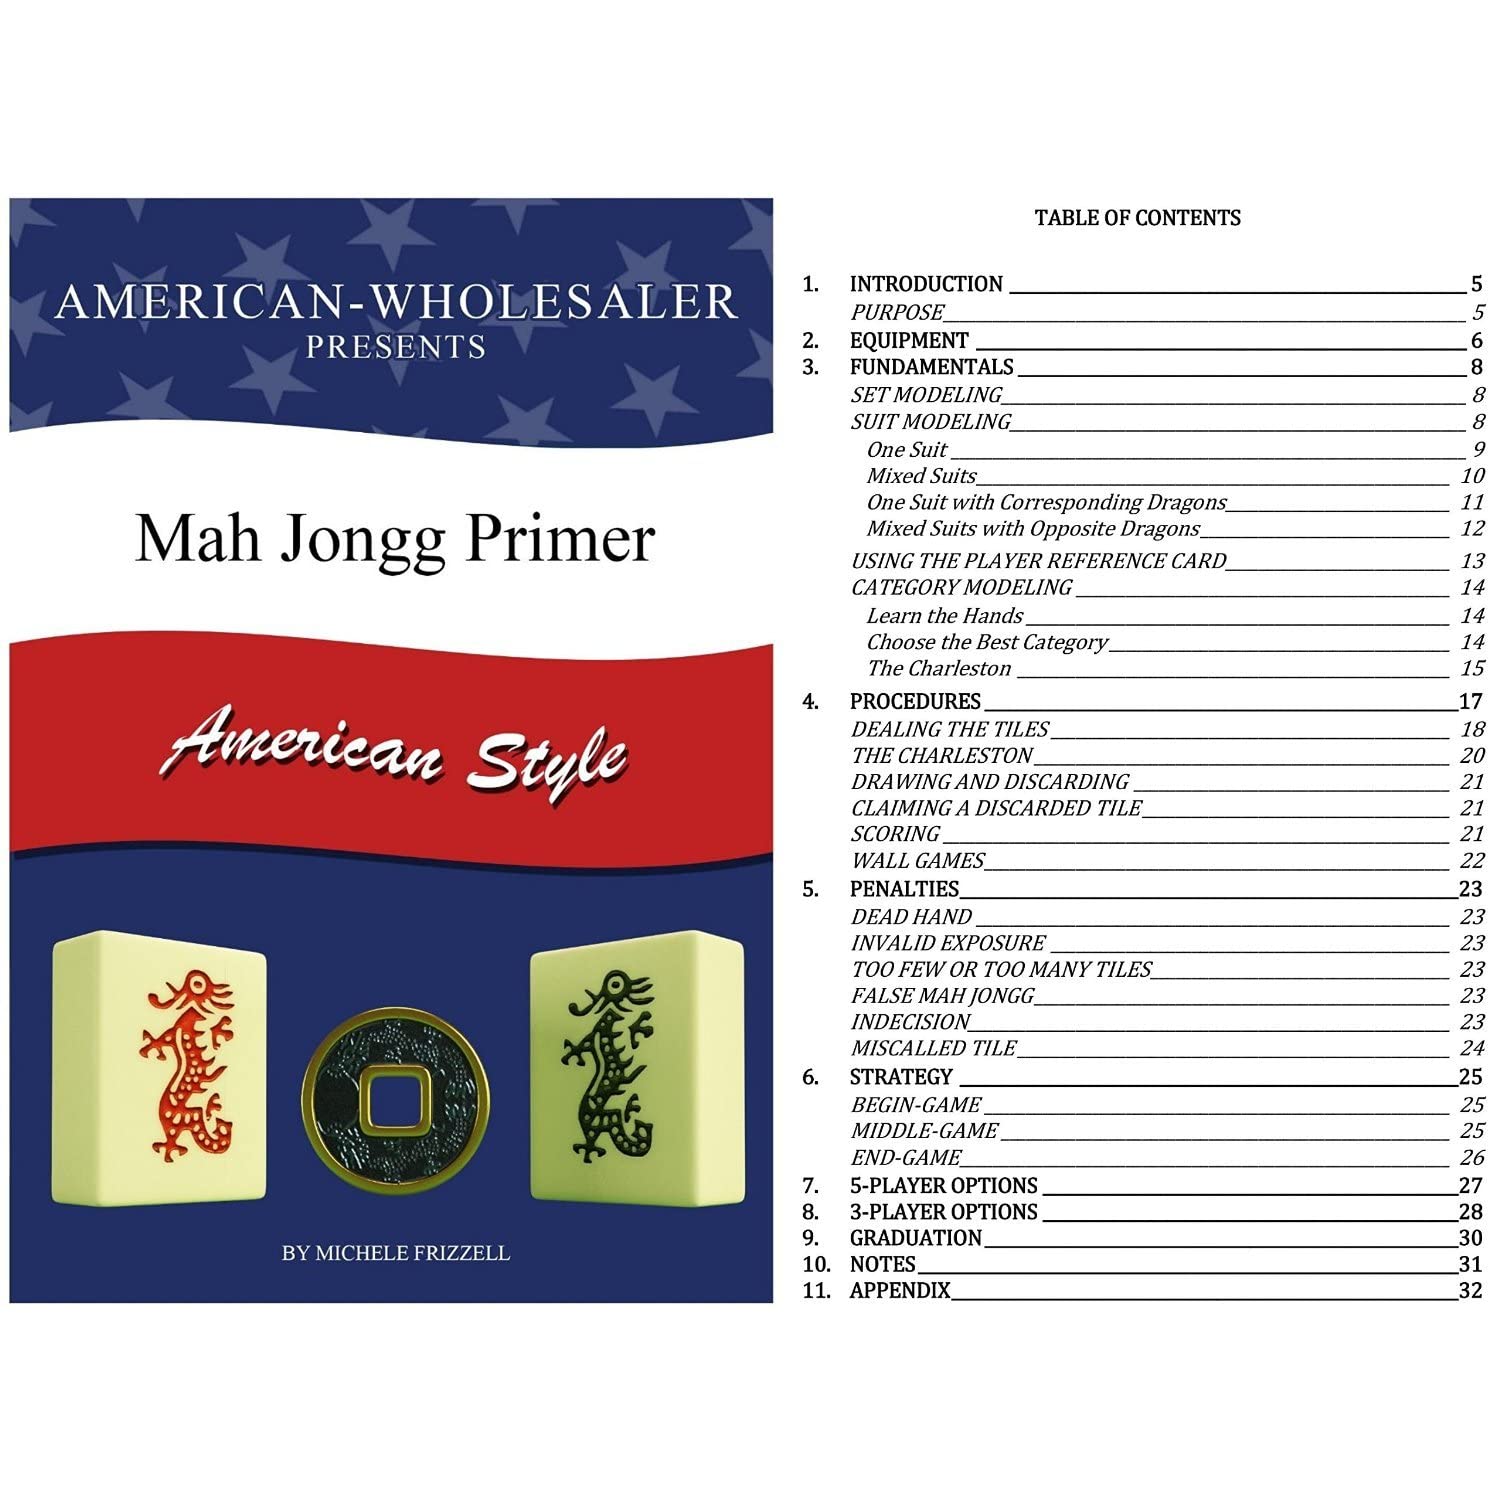 NEW! - American Mahjong Set - 166 White Tiles (All-in-One Rack/Pushers), Silver Aluminum Case - Large Classic Mah Jongg Game Set